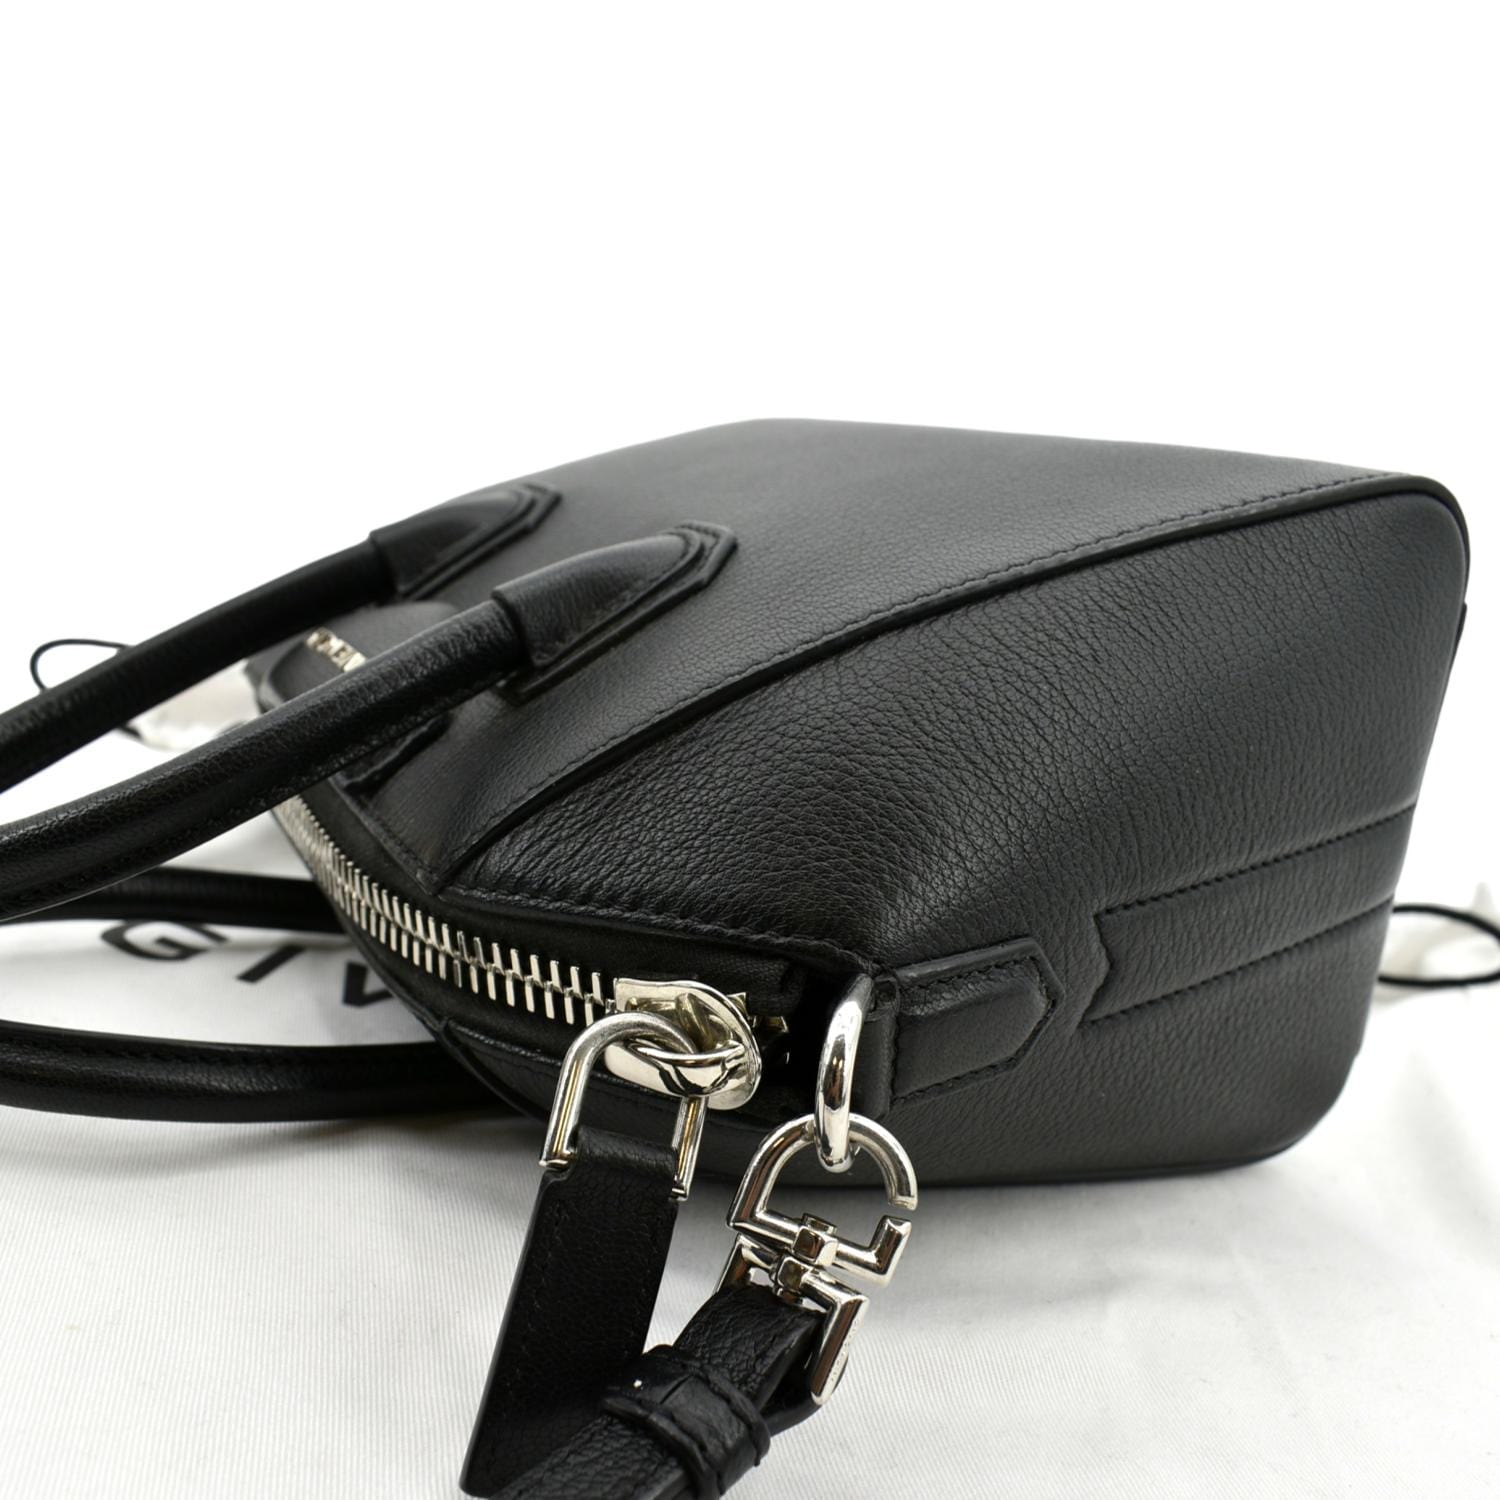 Antigona leather clutch bag